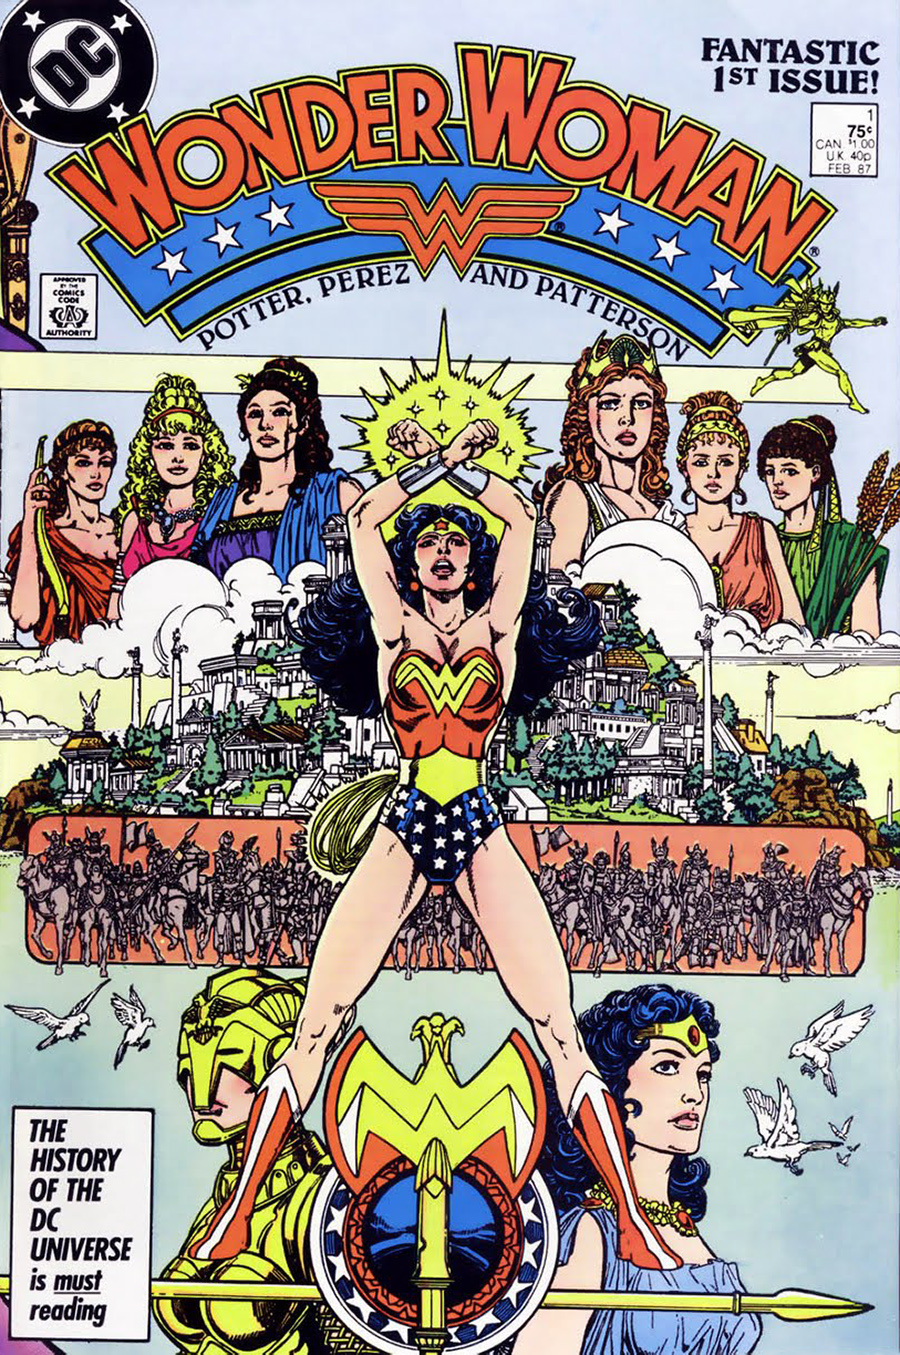 Wonder Woman Vol. 2 #1